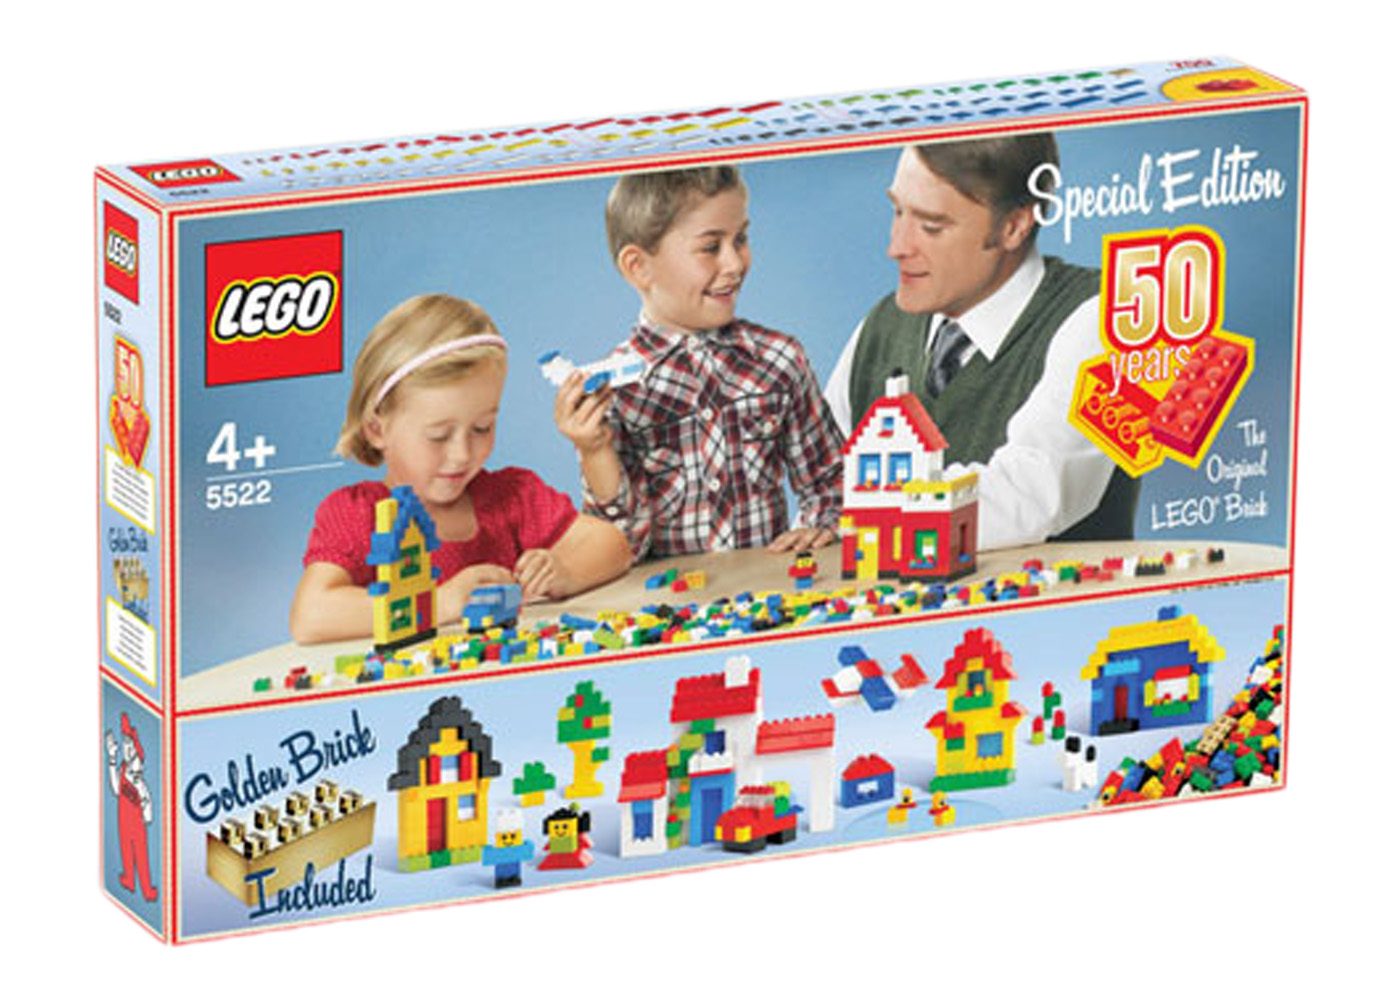 LEGO Bricks and More Golden Anniversary Set 5522